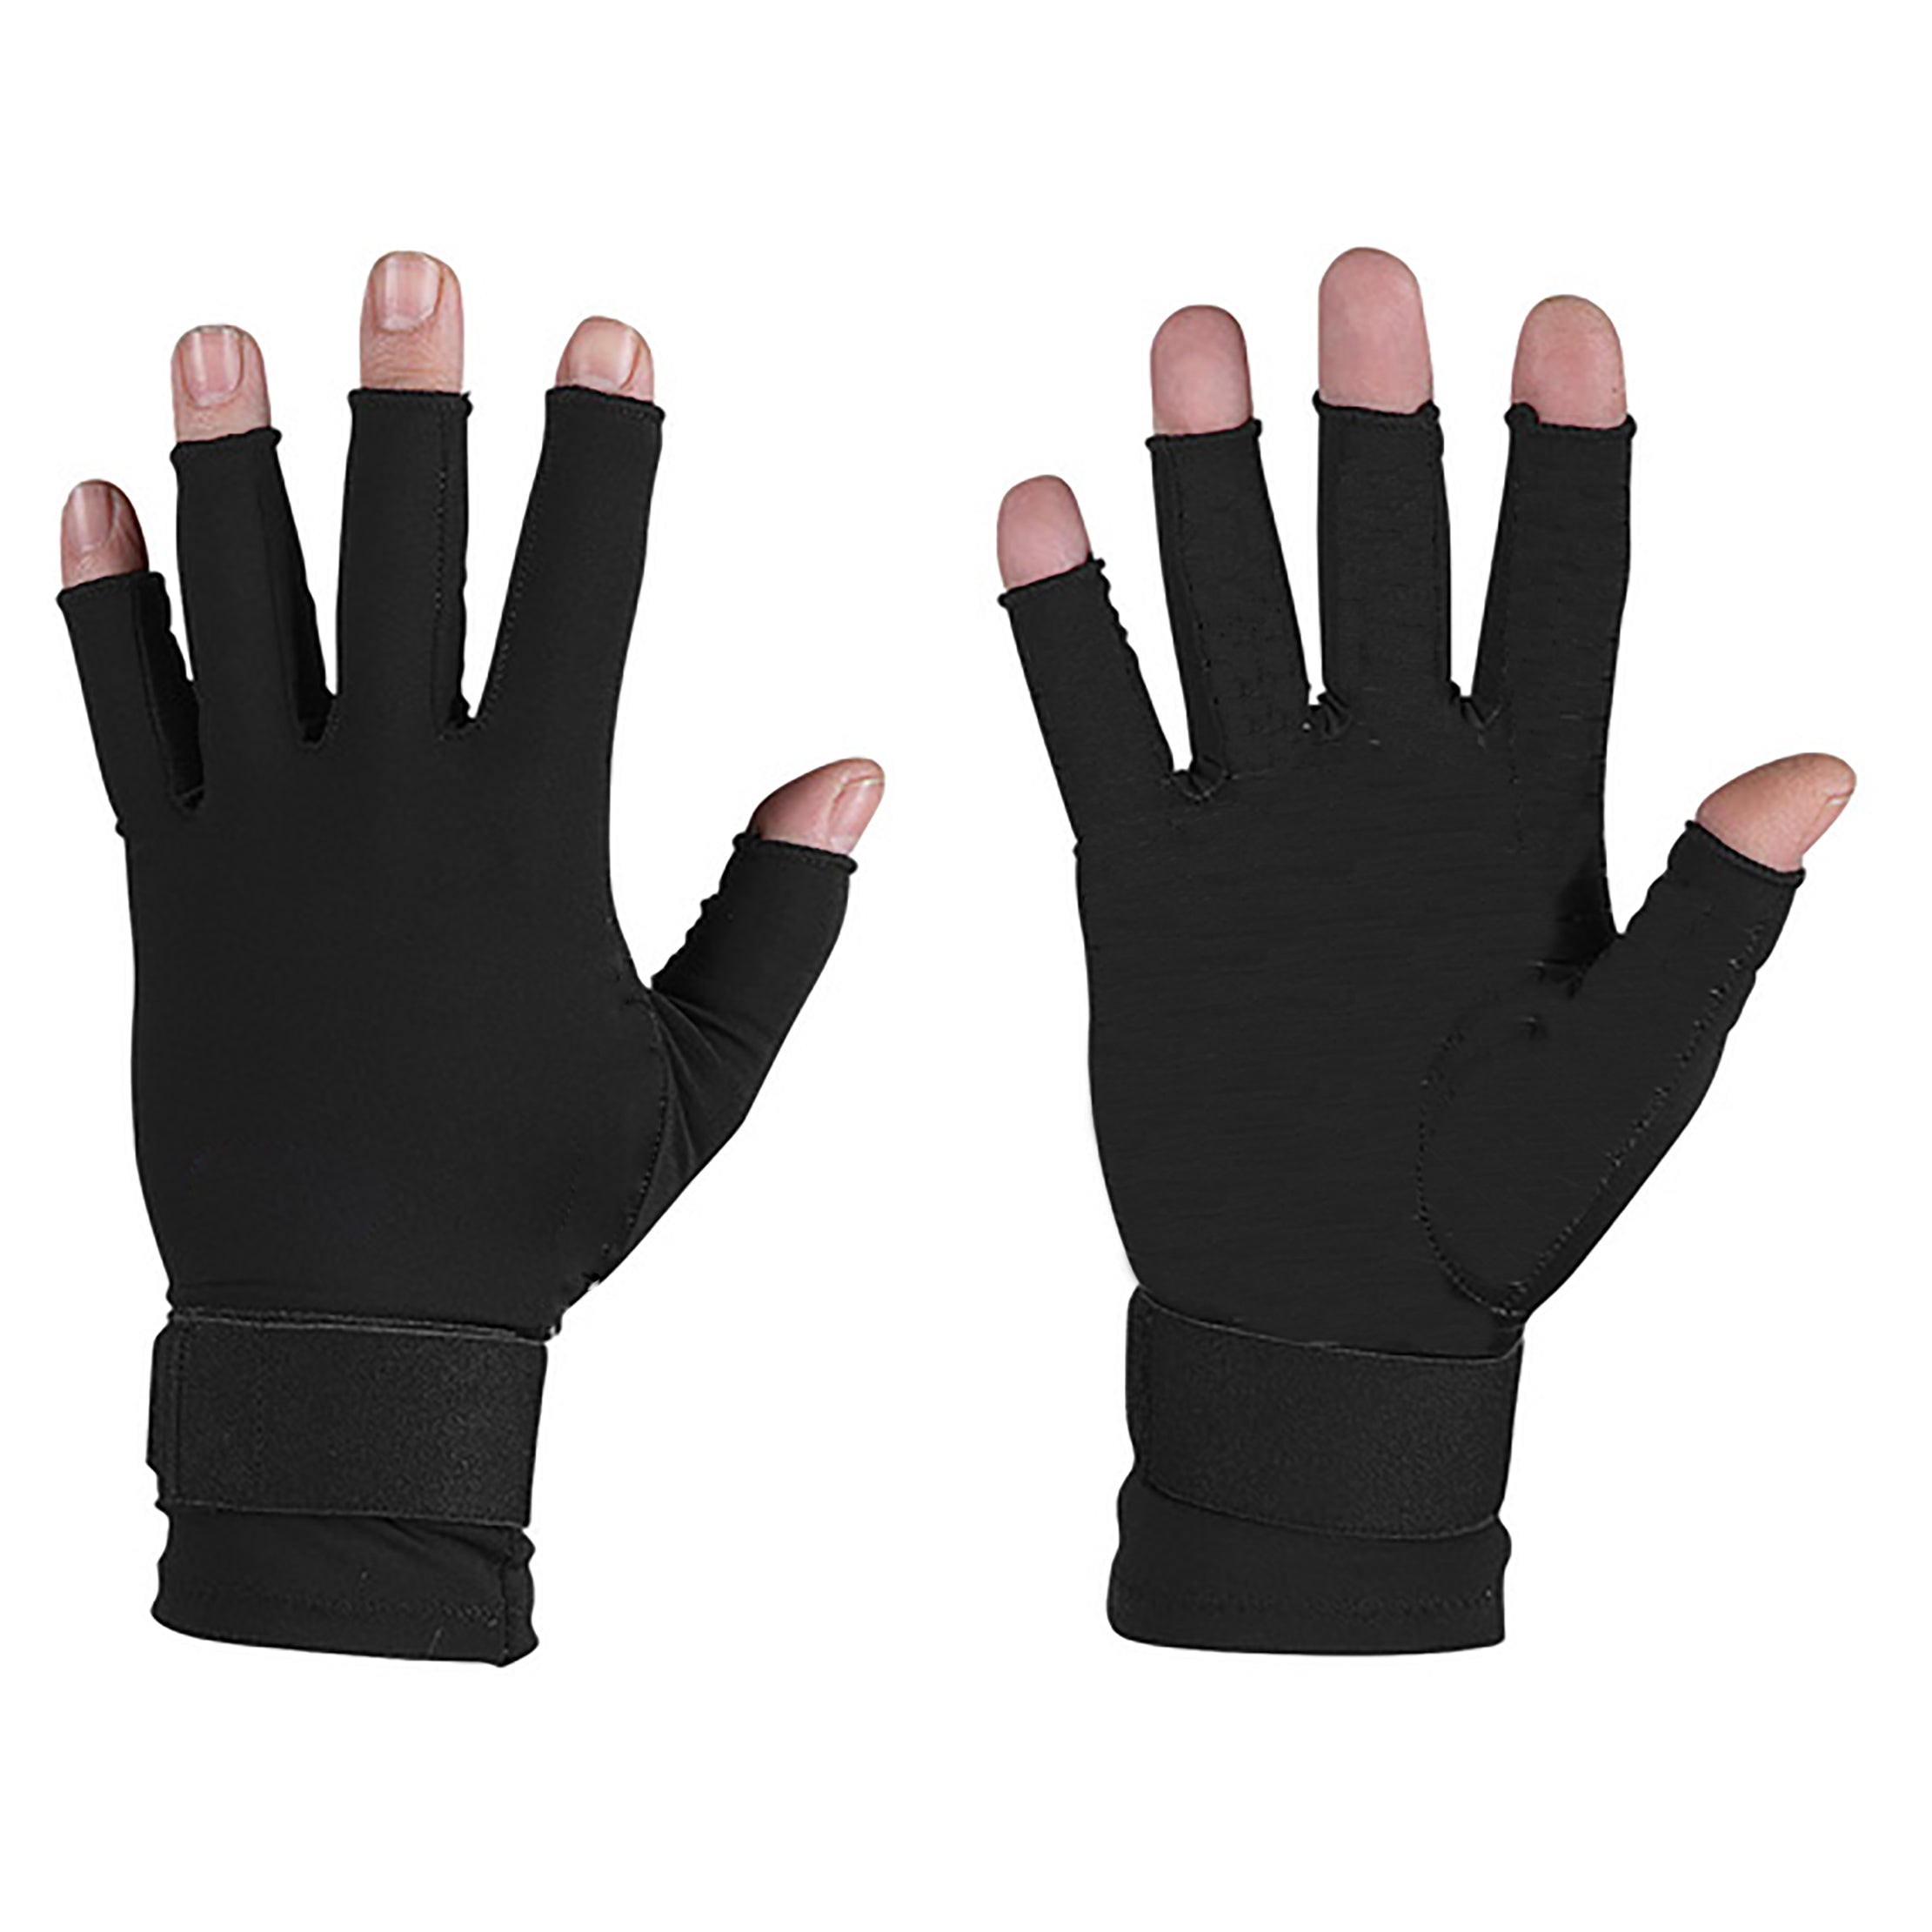 Futuro Compression Glove, S/M, Hand/Wrist « Discount Drug Mart